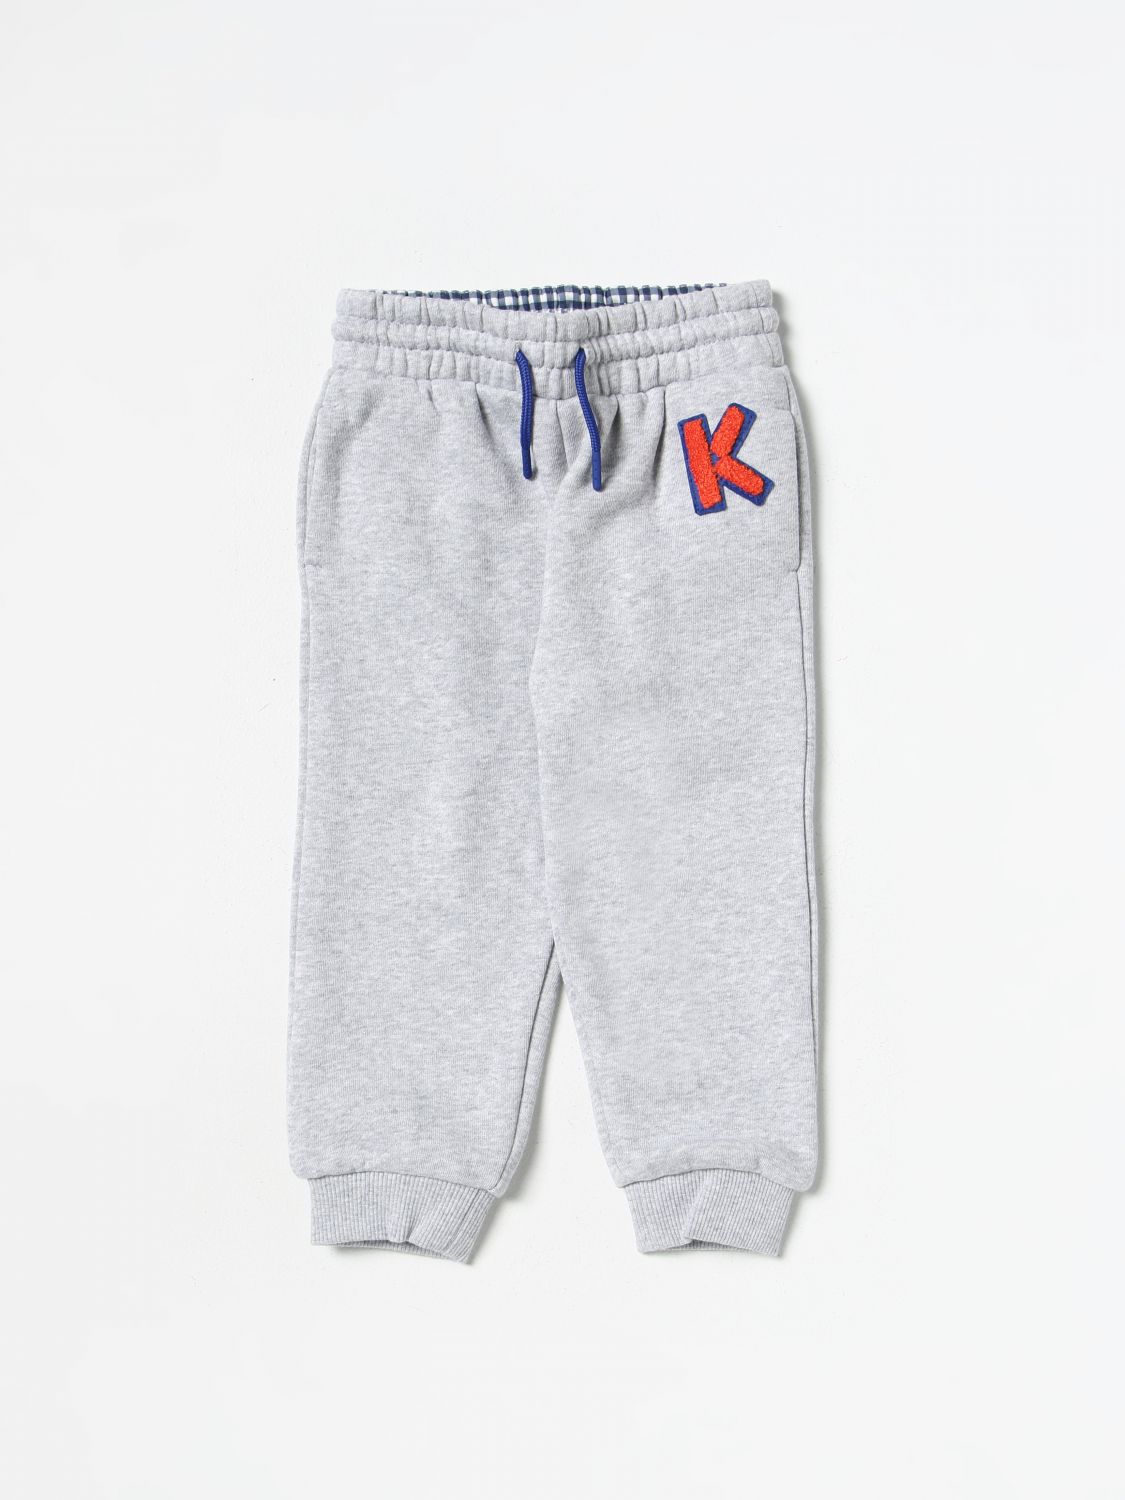 Kenzo Babies' Pants  Kids Kids Color Grey